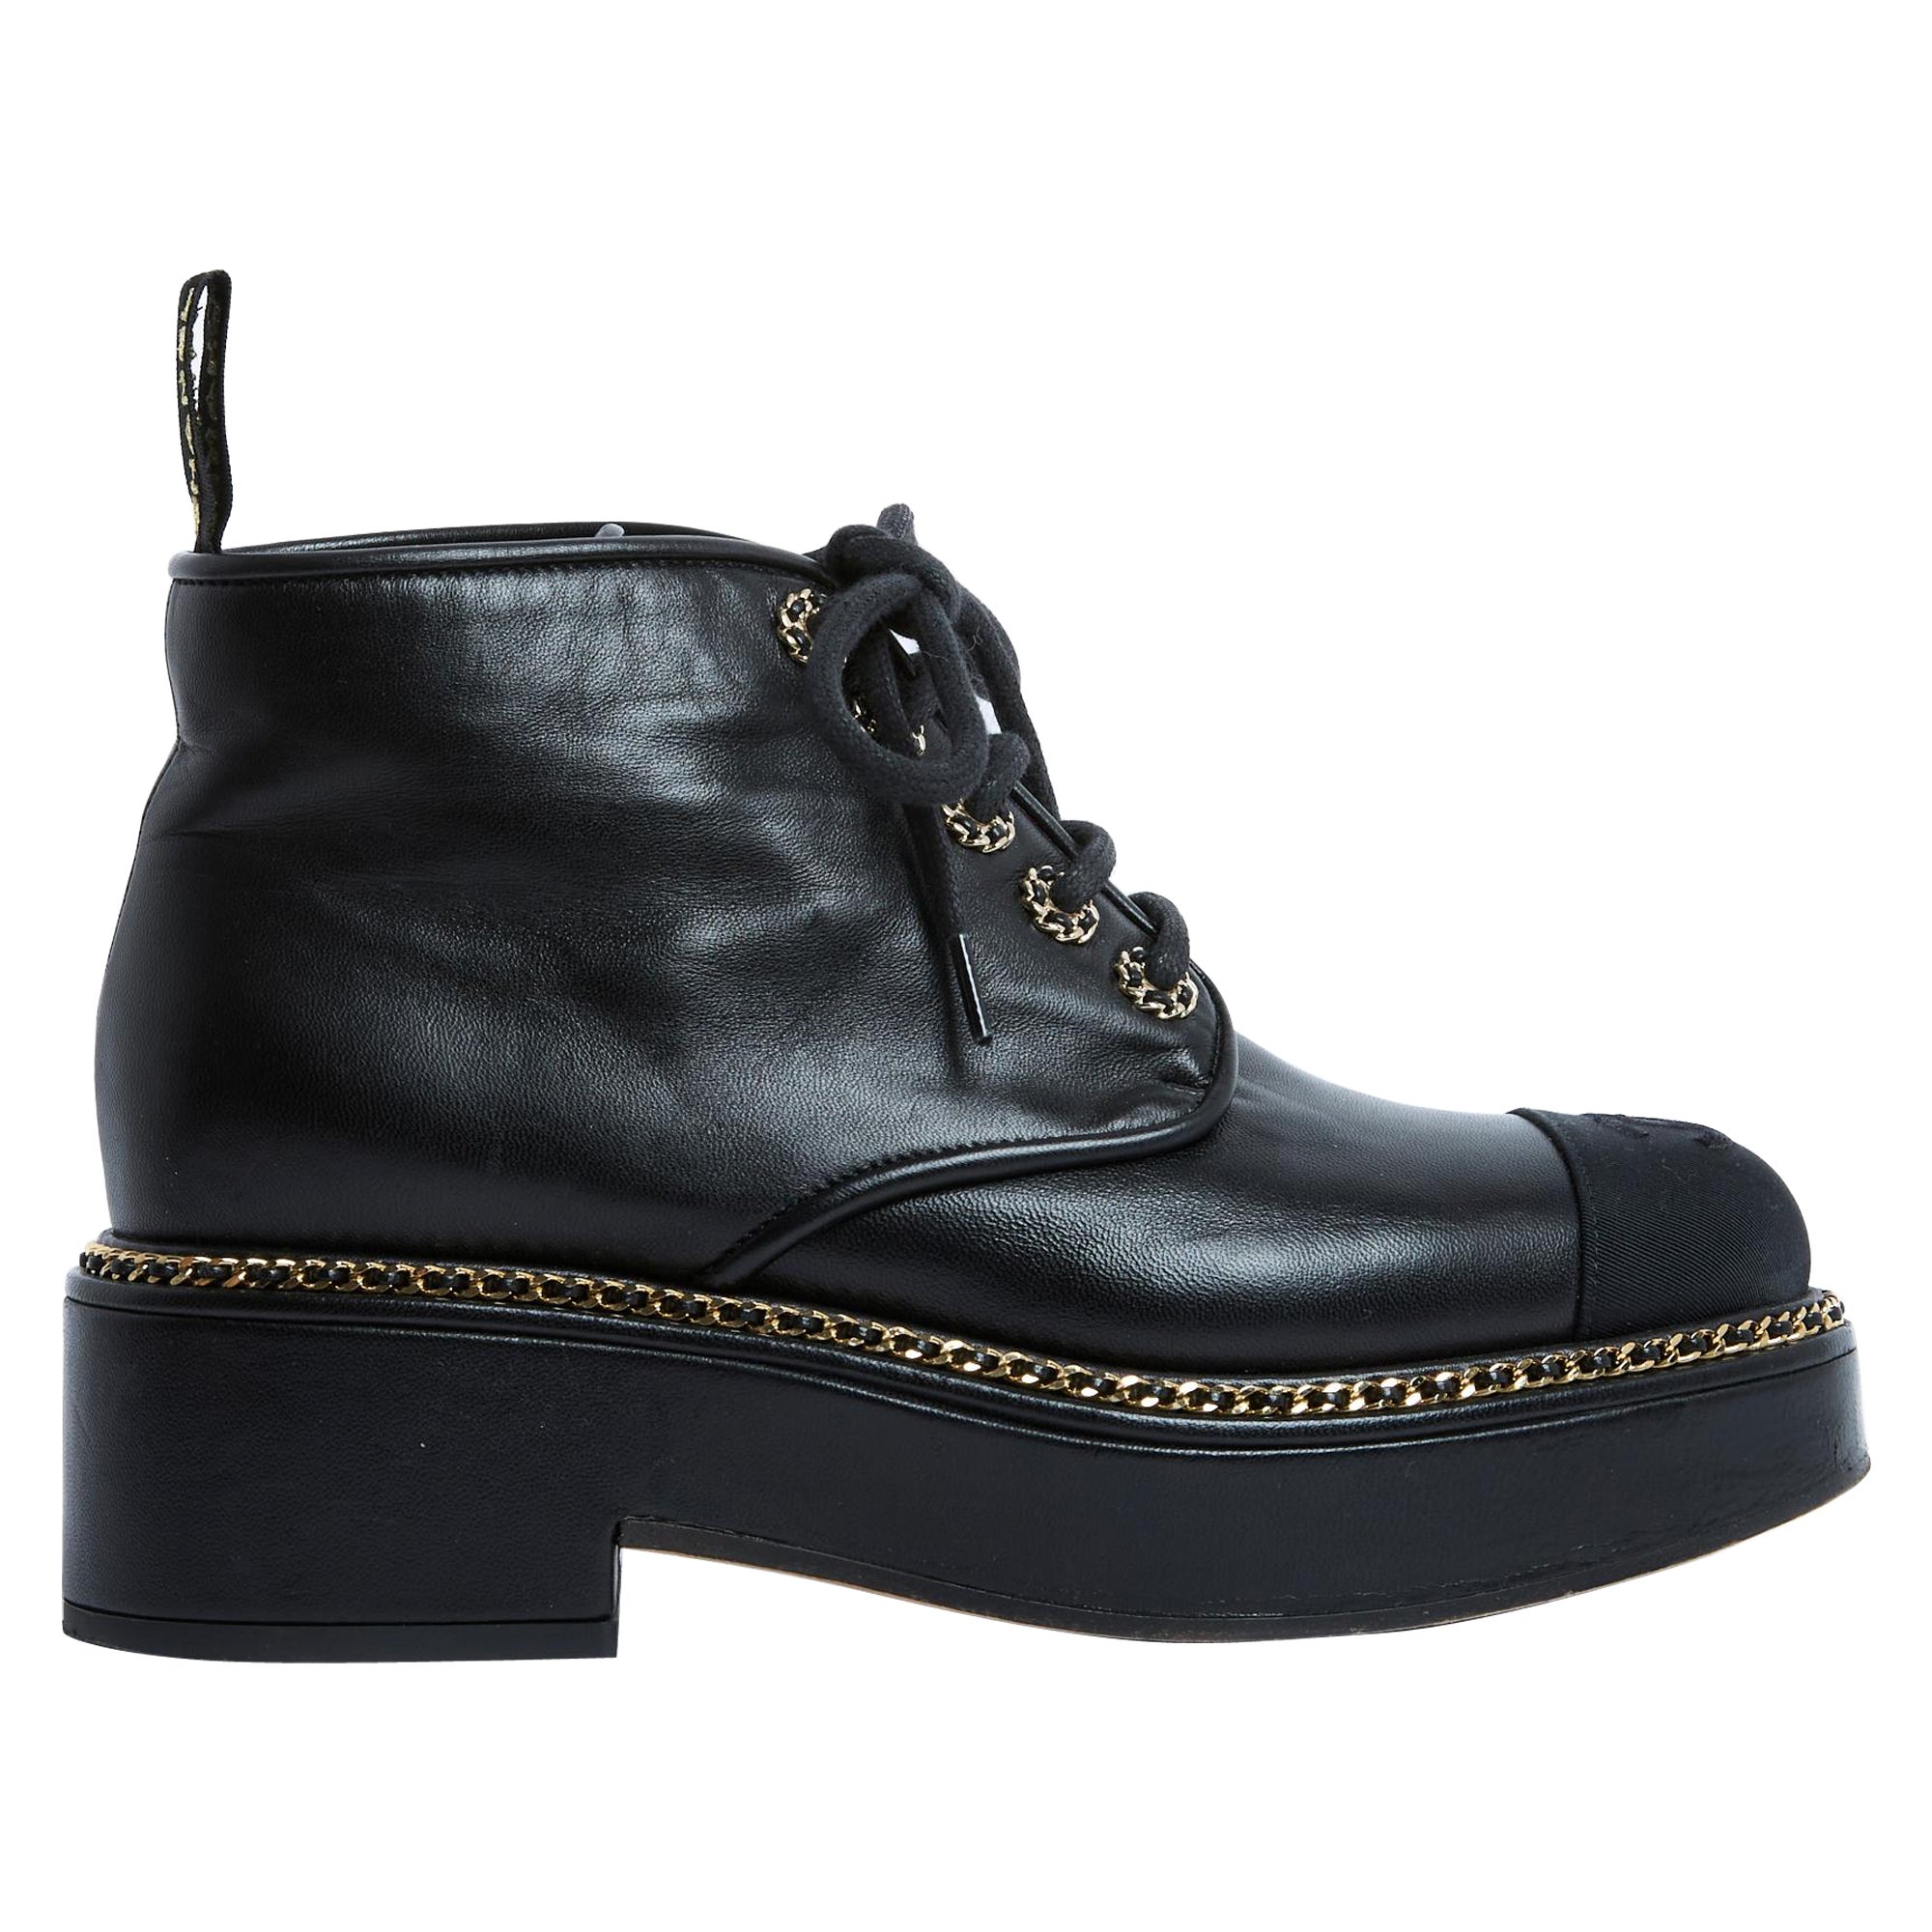 2020 Chanel 2 tones Boots EU39 New For Sale